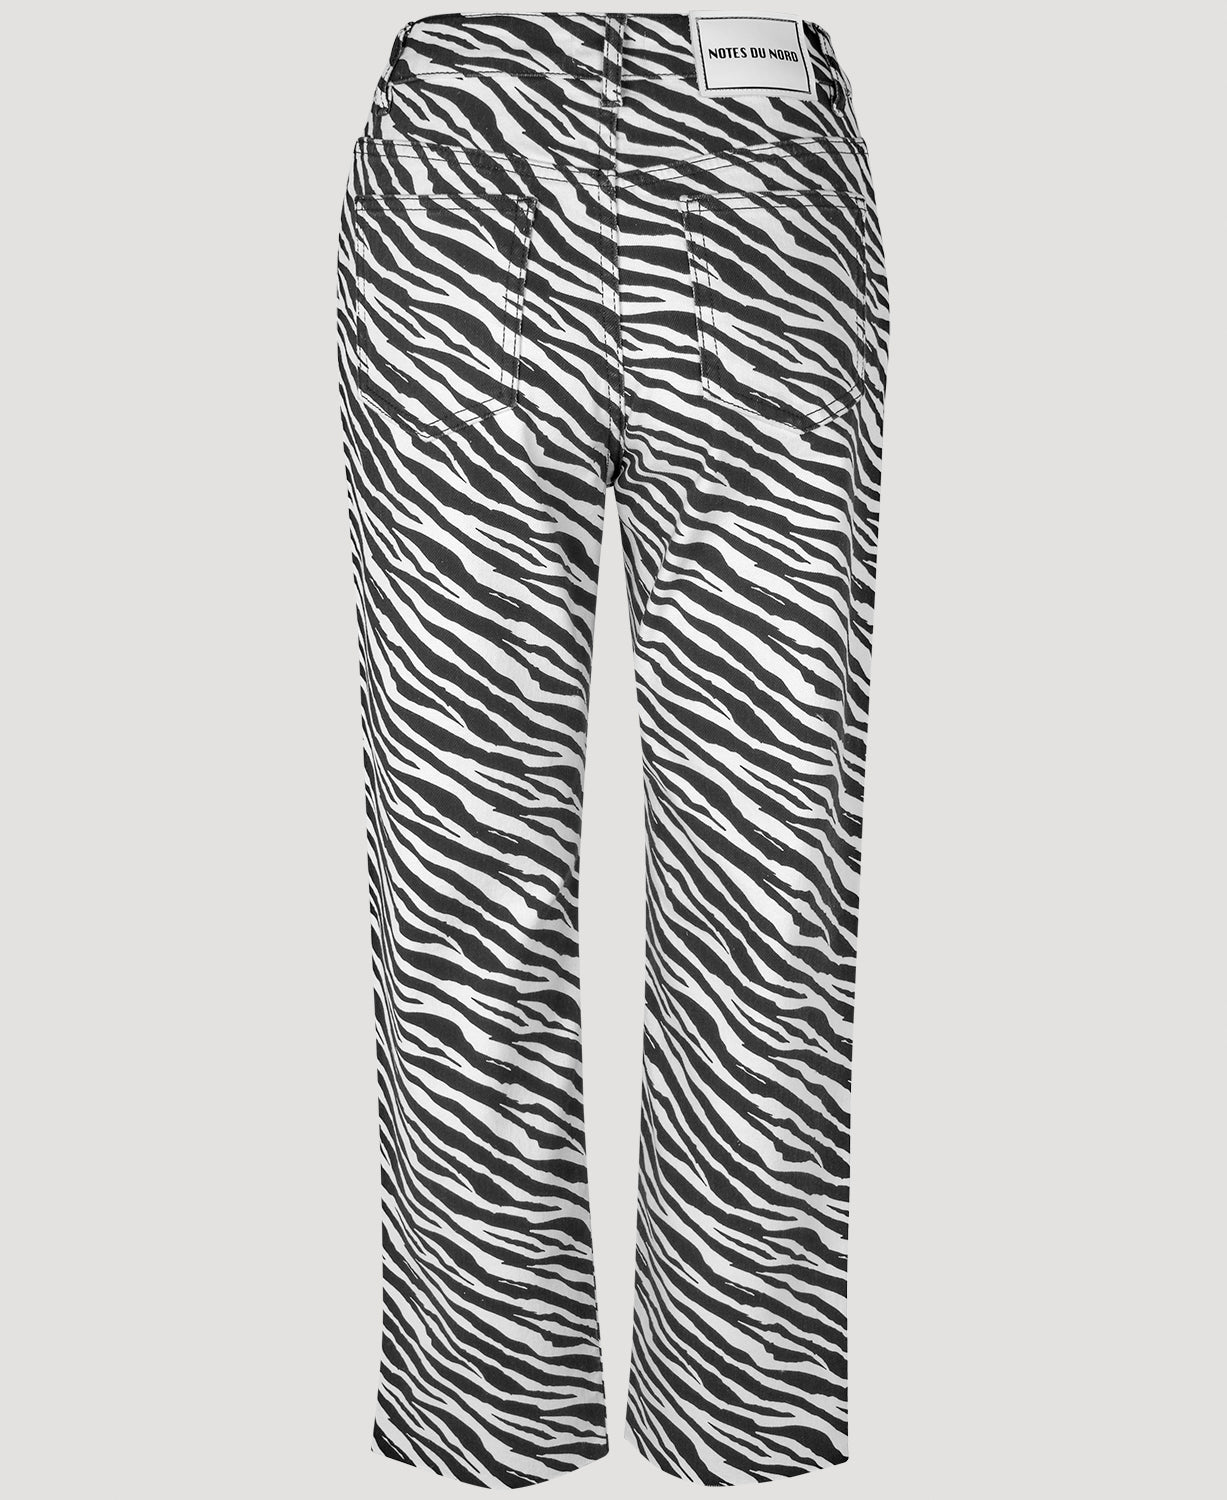 Notes du Nord Gia Jeans P Jeans 913 Zebra